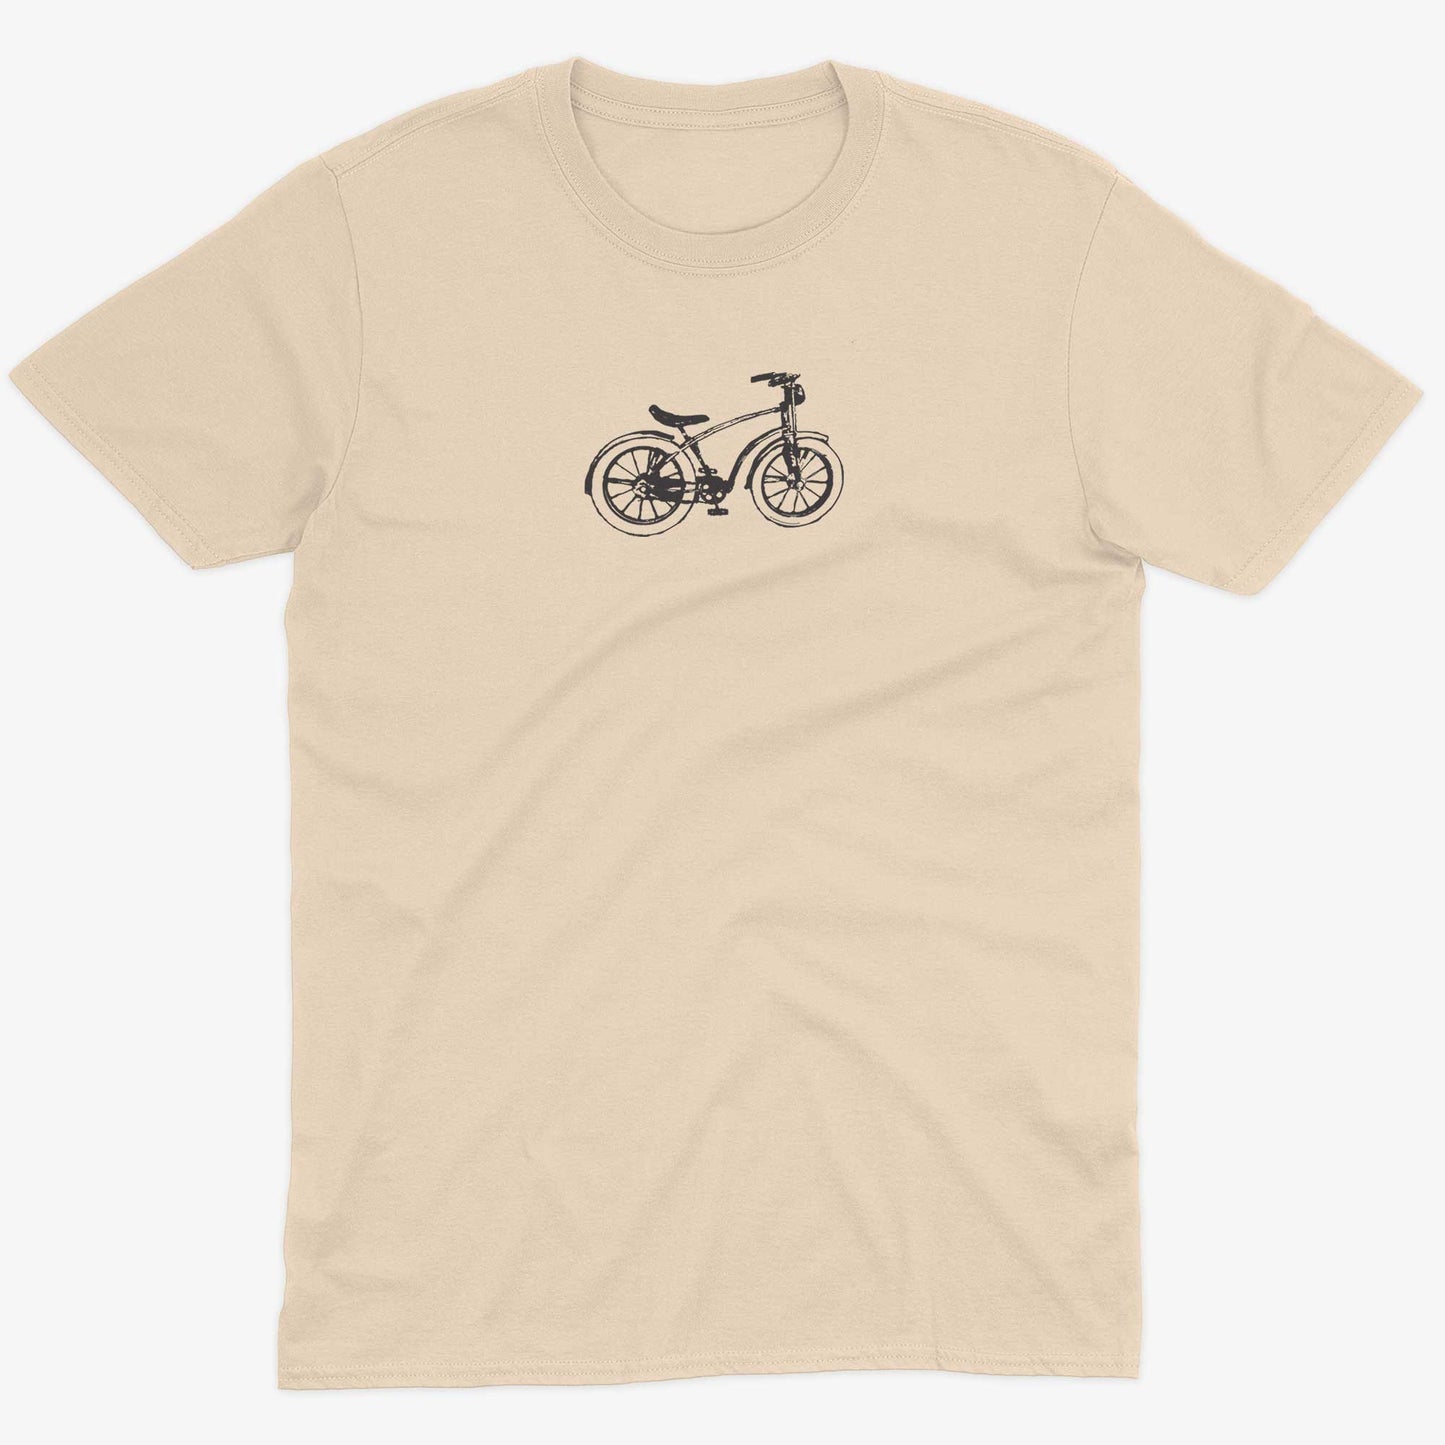 Vintage Bike Unisex Or Women's Cotton T-shirt-Organic Natural-Unisex